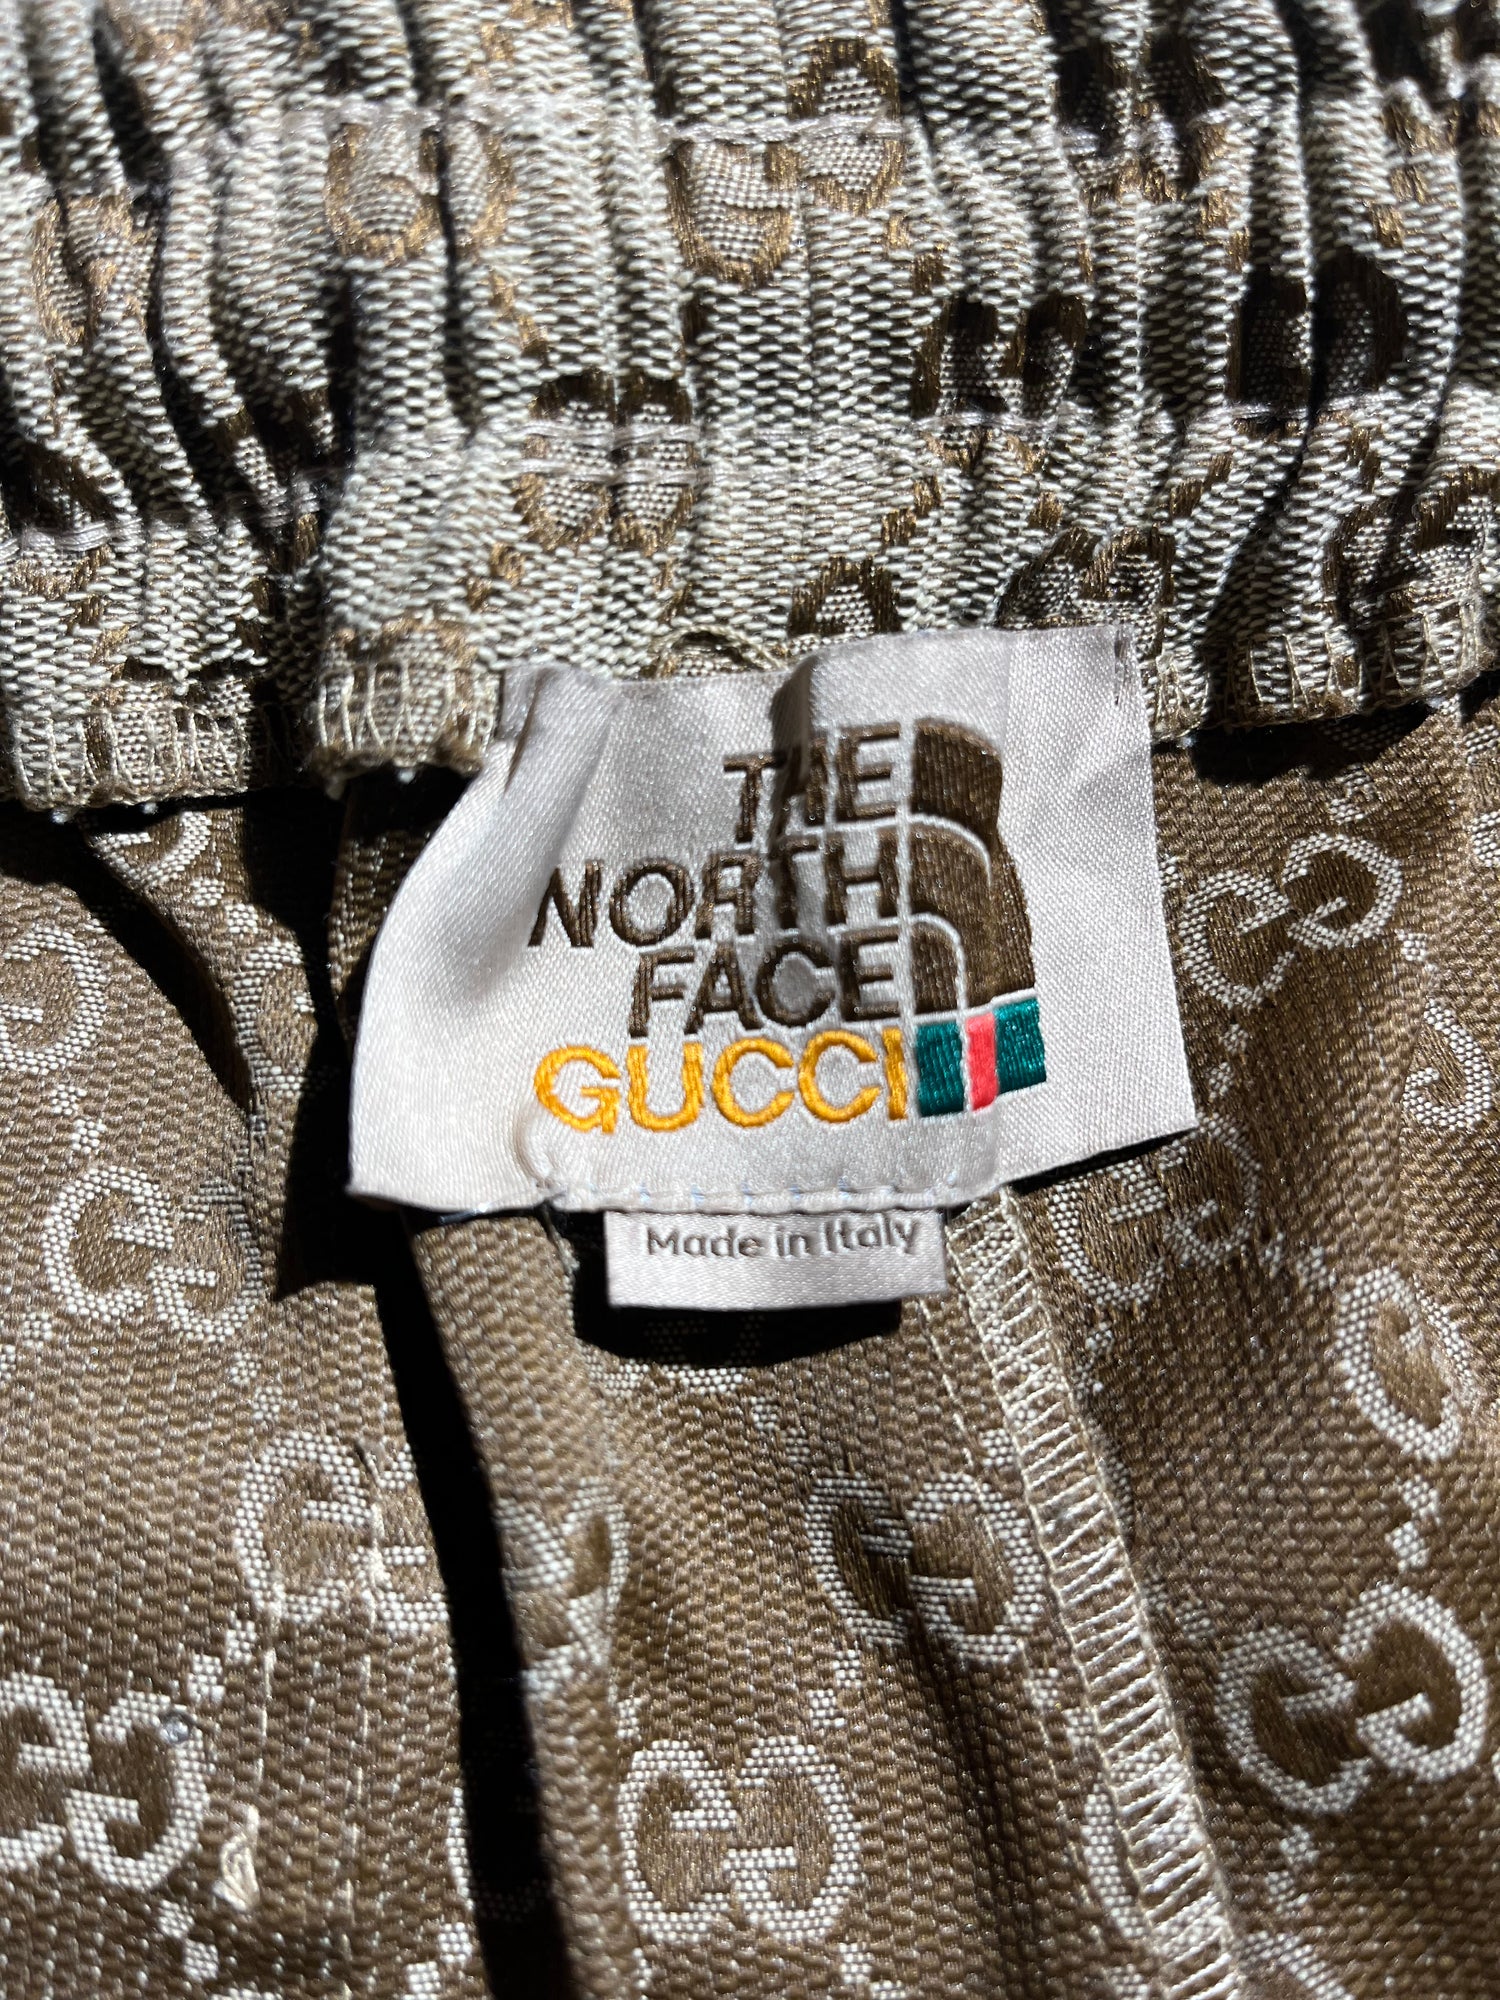 Vintage The North Face Gucci Pants Bootleg – Glorydays Fine Goods